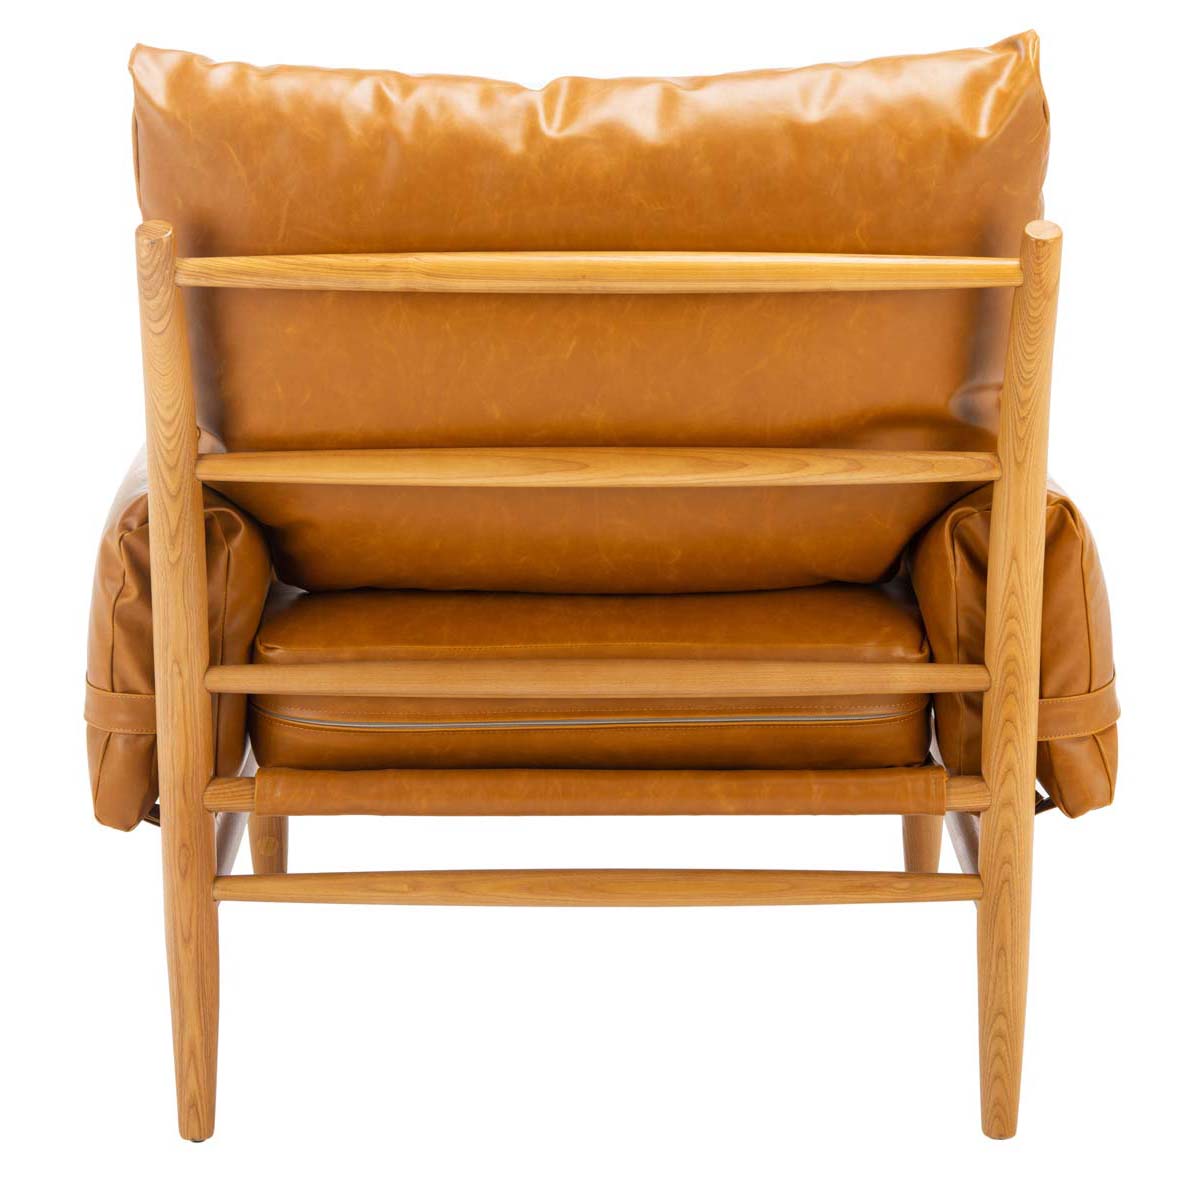 Safavieh Oslo Mid Century Arm Chair, ACH4509 - Caramel/Natural